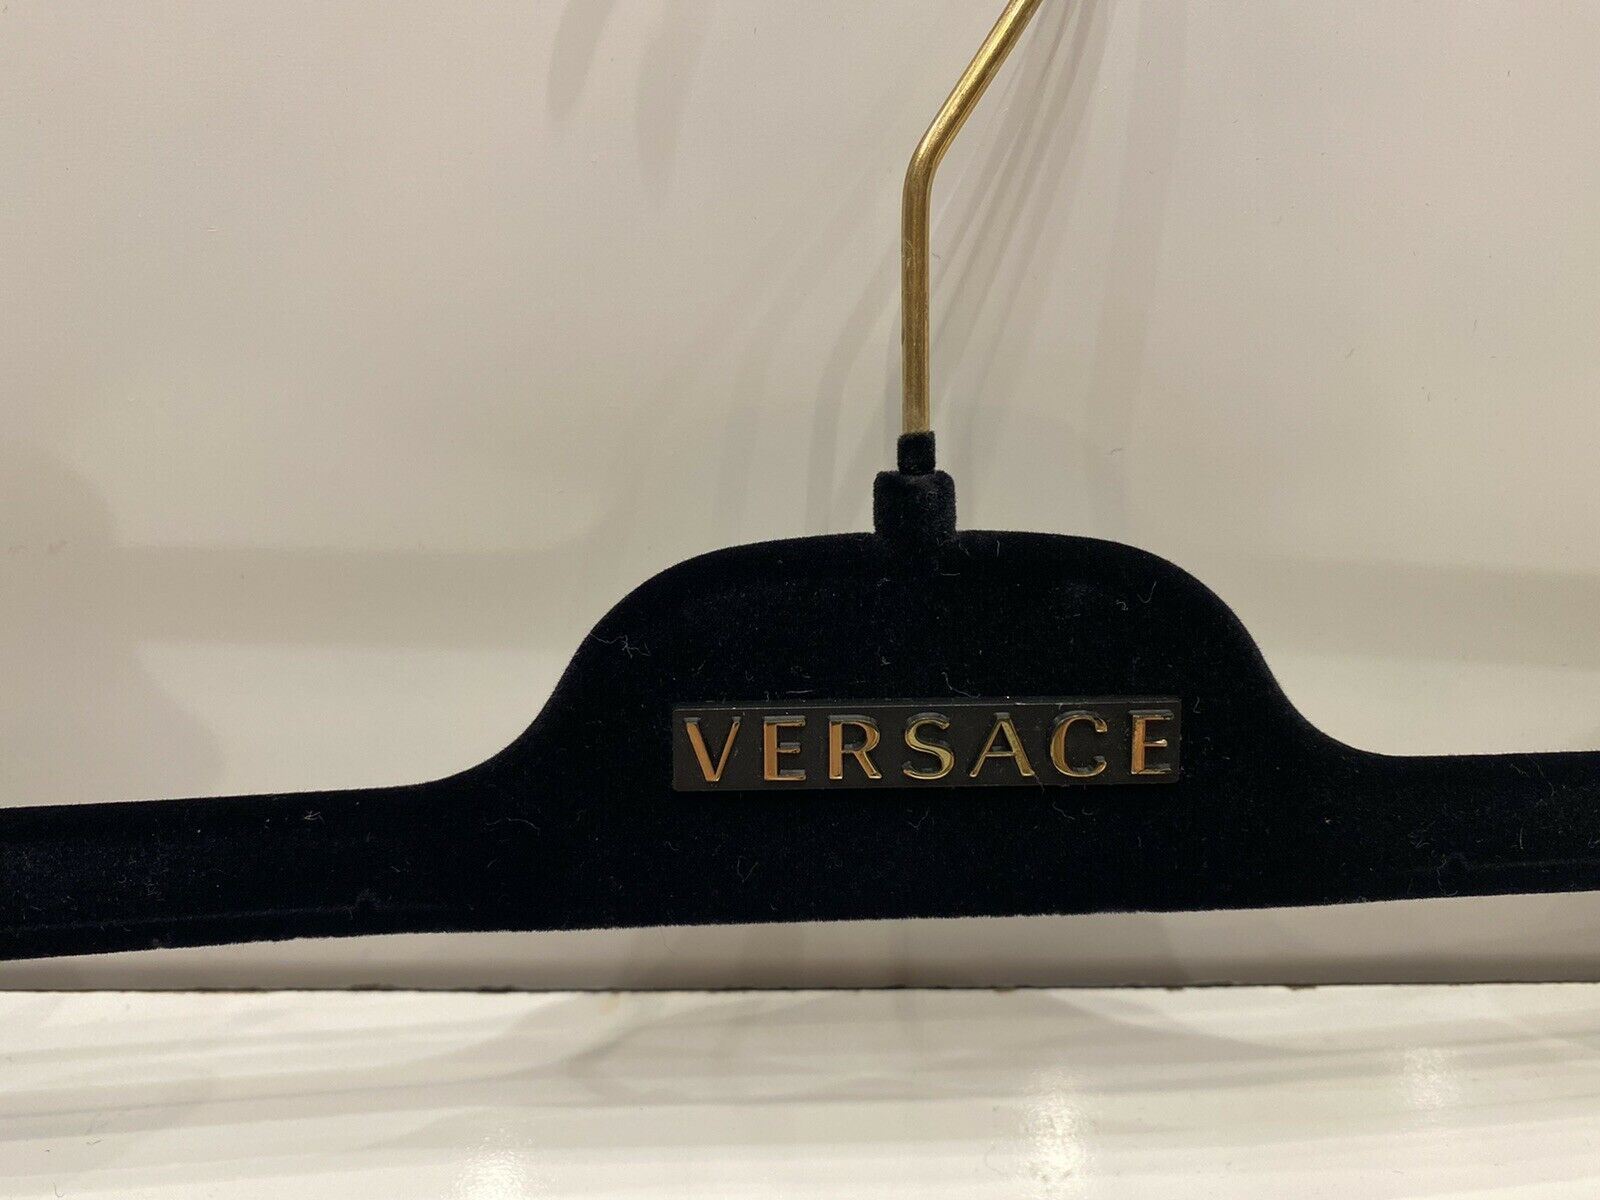 VERSACE Black Velvet 14.5" Clip Pants Hangers with Gold Hardware 14.5x3.5